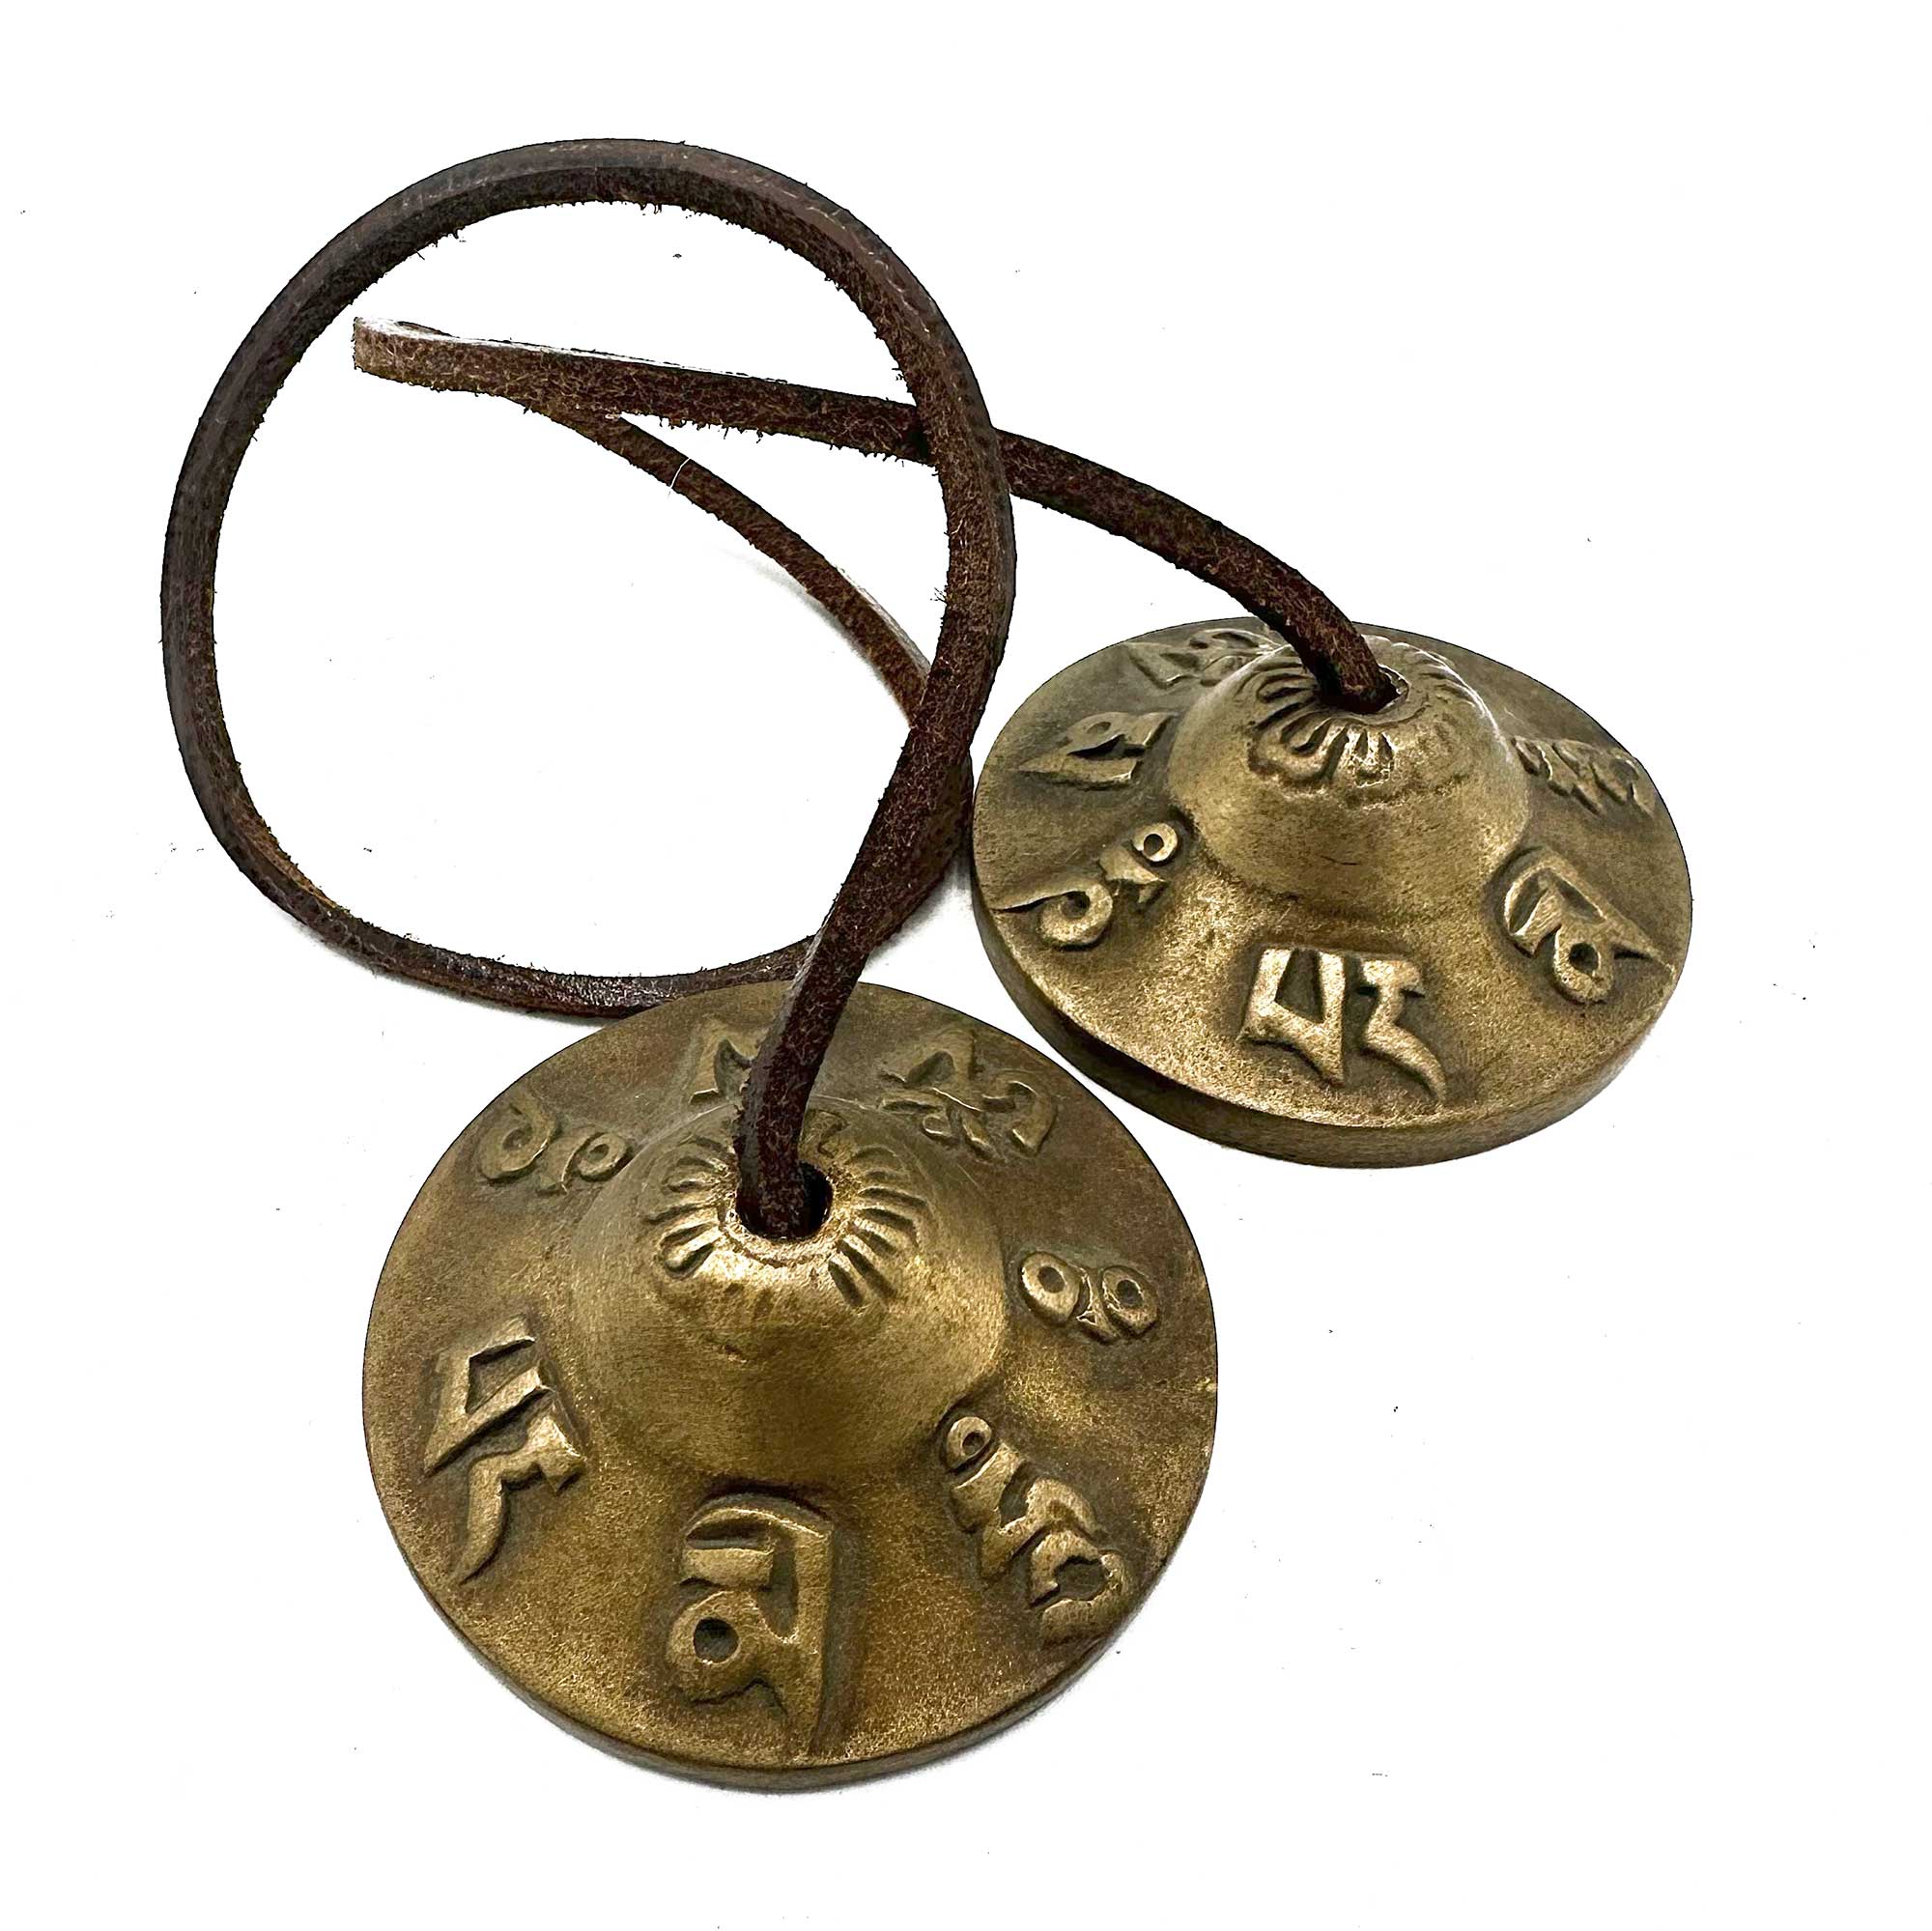 View Tibetan Tingsha Lucky Symbols approx 6cm information